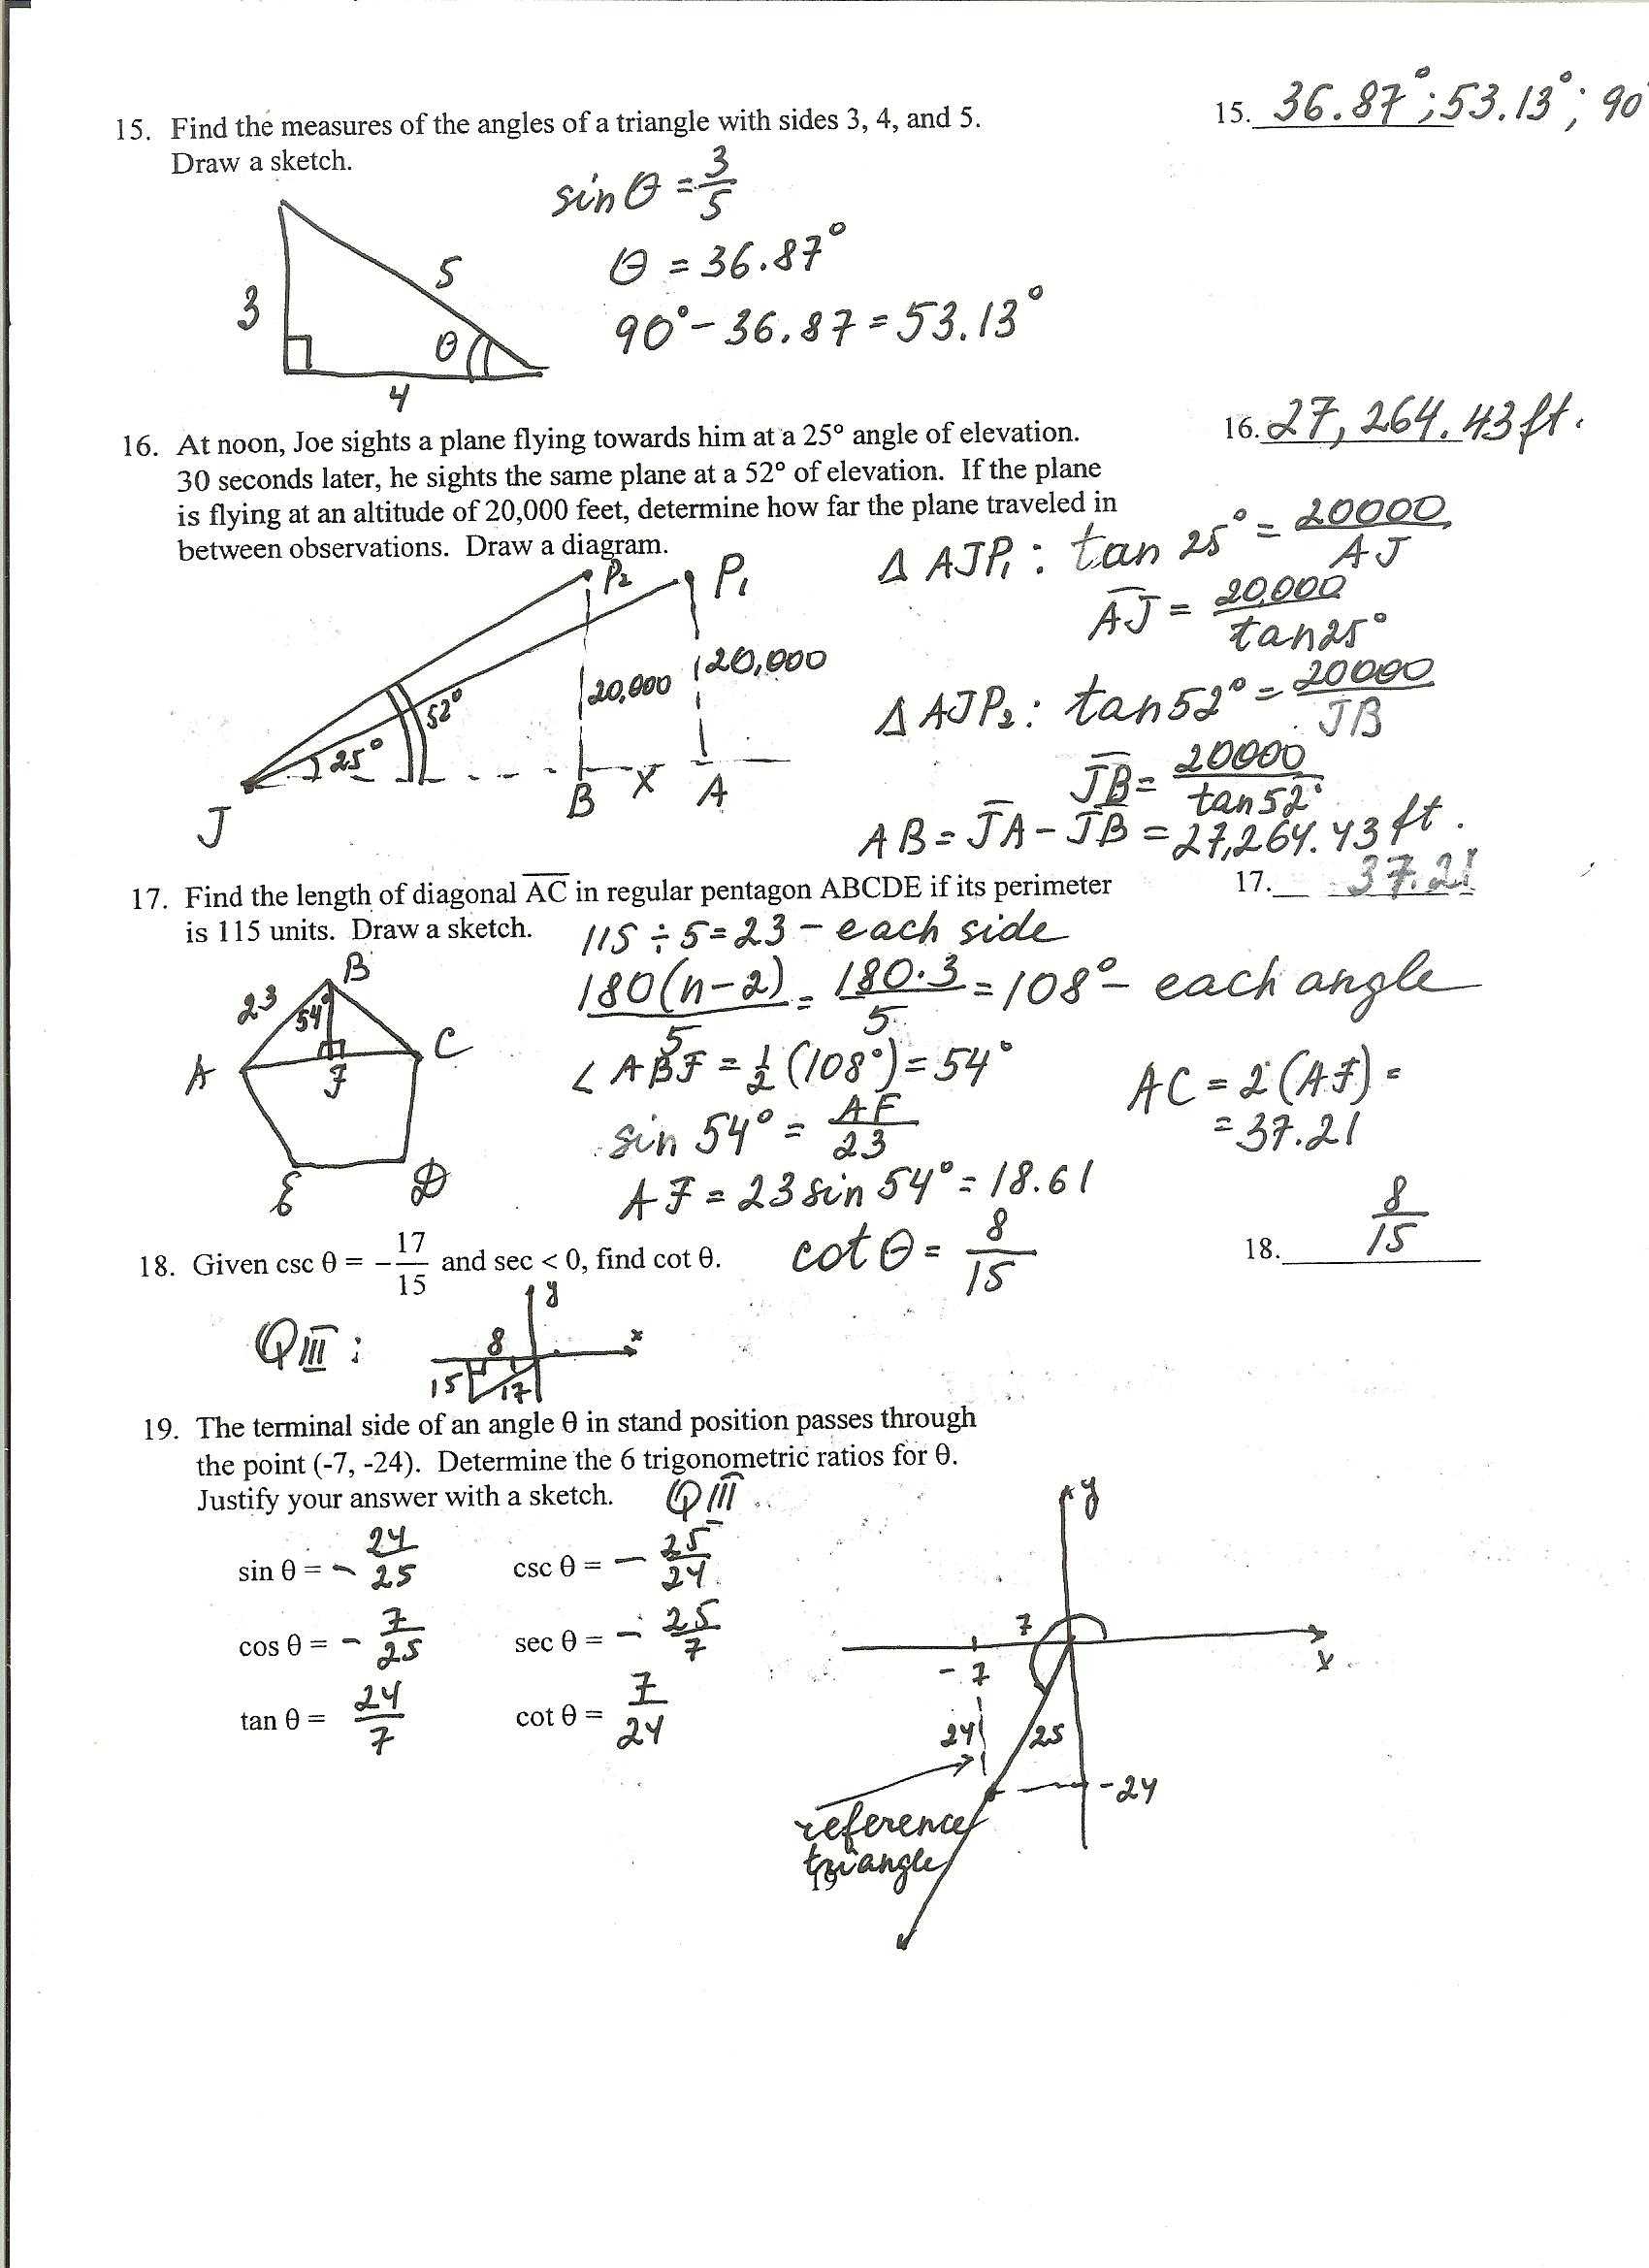 Extended Algebra 1 Functions Worksheet 4 Answers or Precalculus Honors